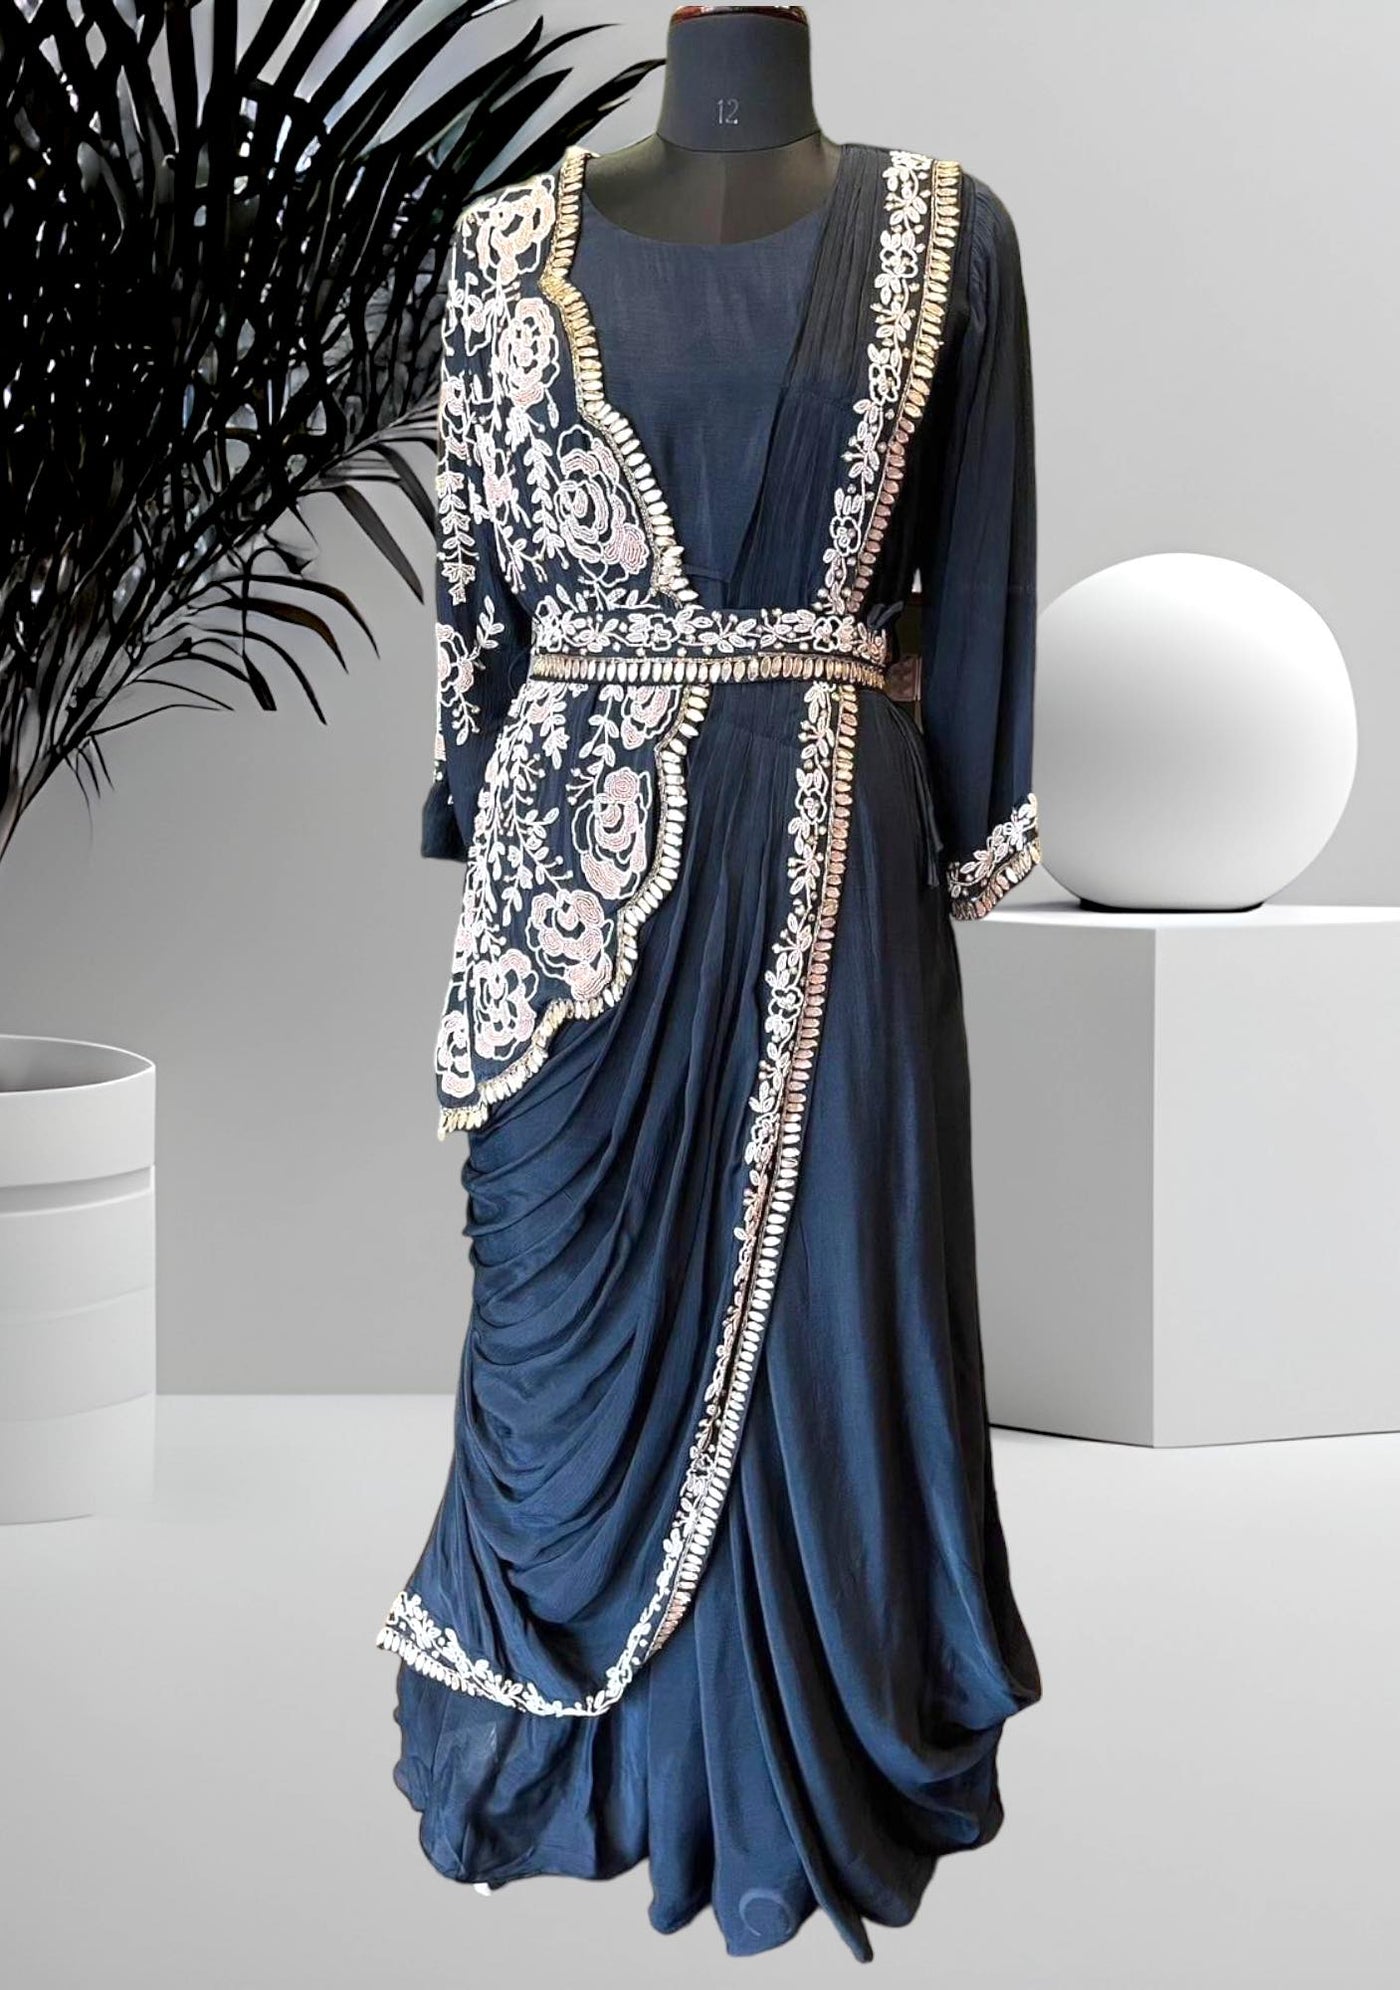 Boutique Designer Ready To Wear Saree Gown - db21906